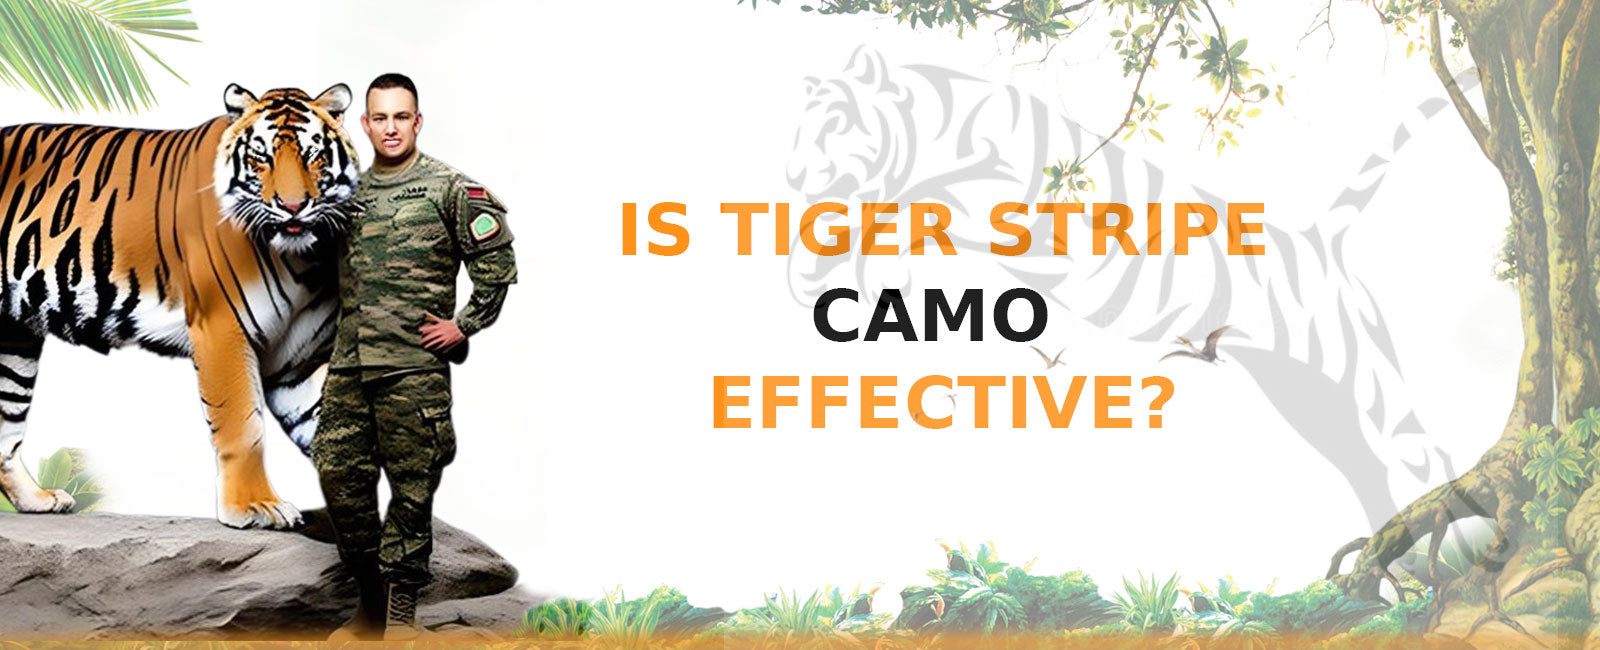 is tiger stripe camo effective?